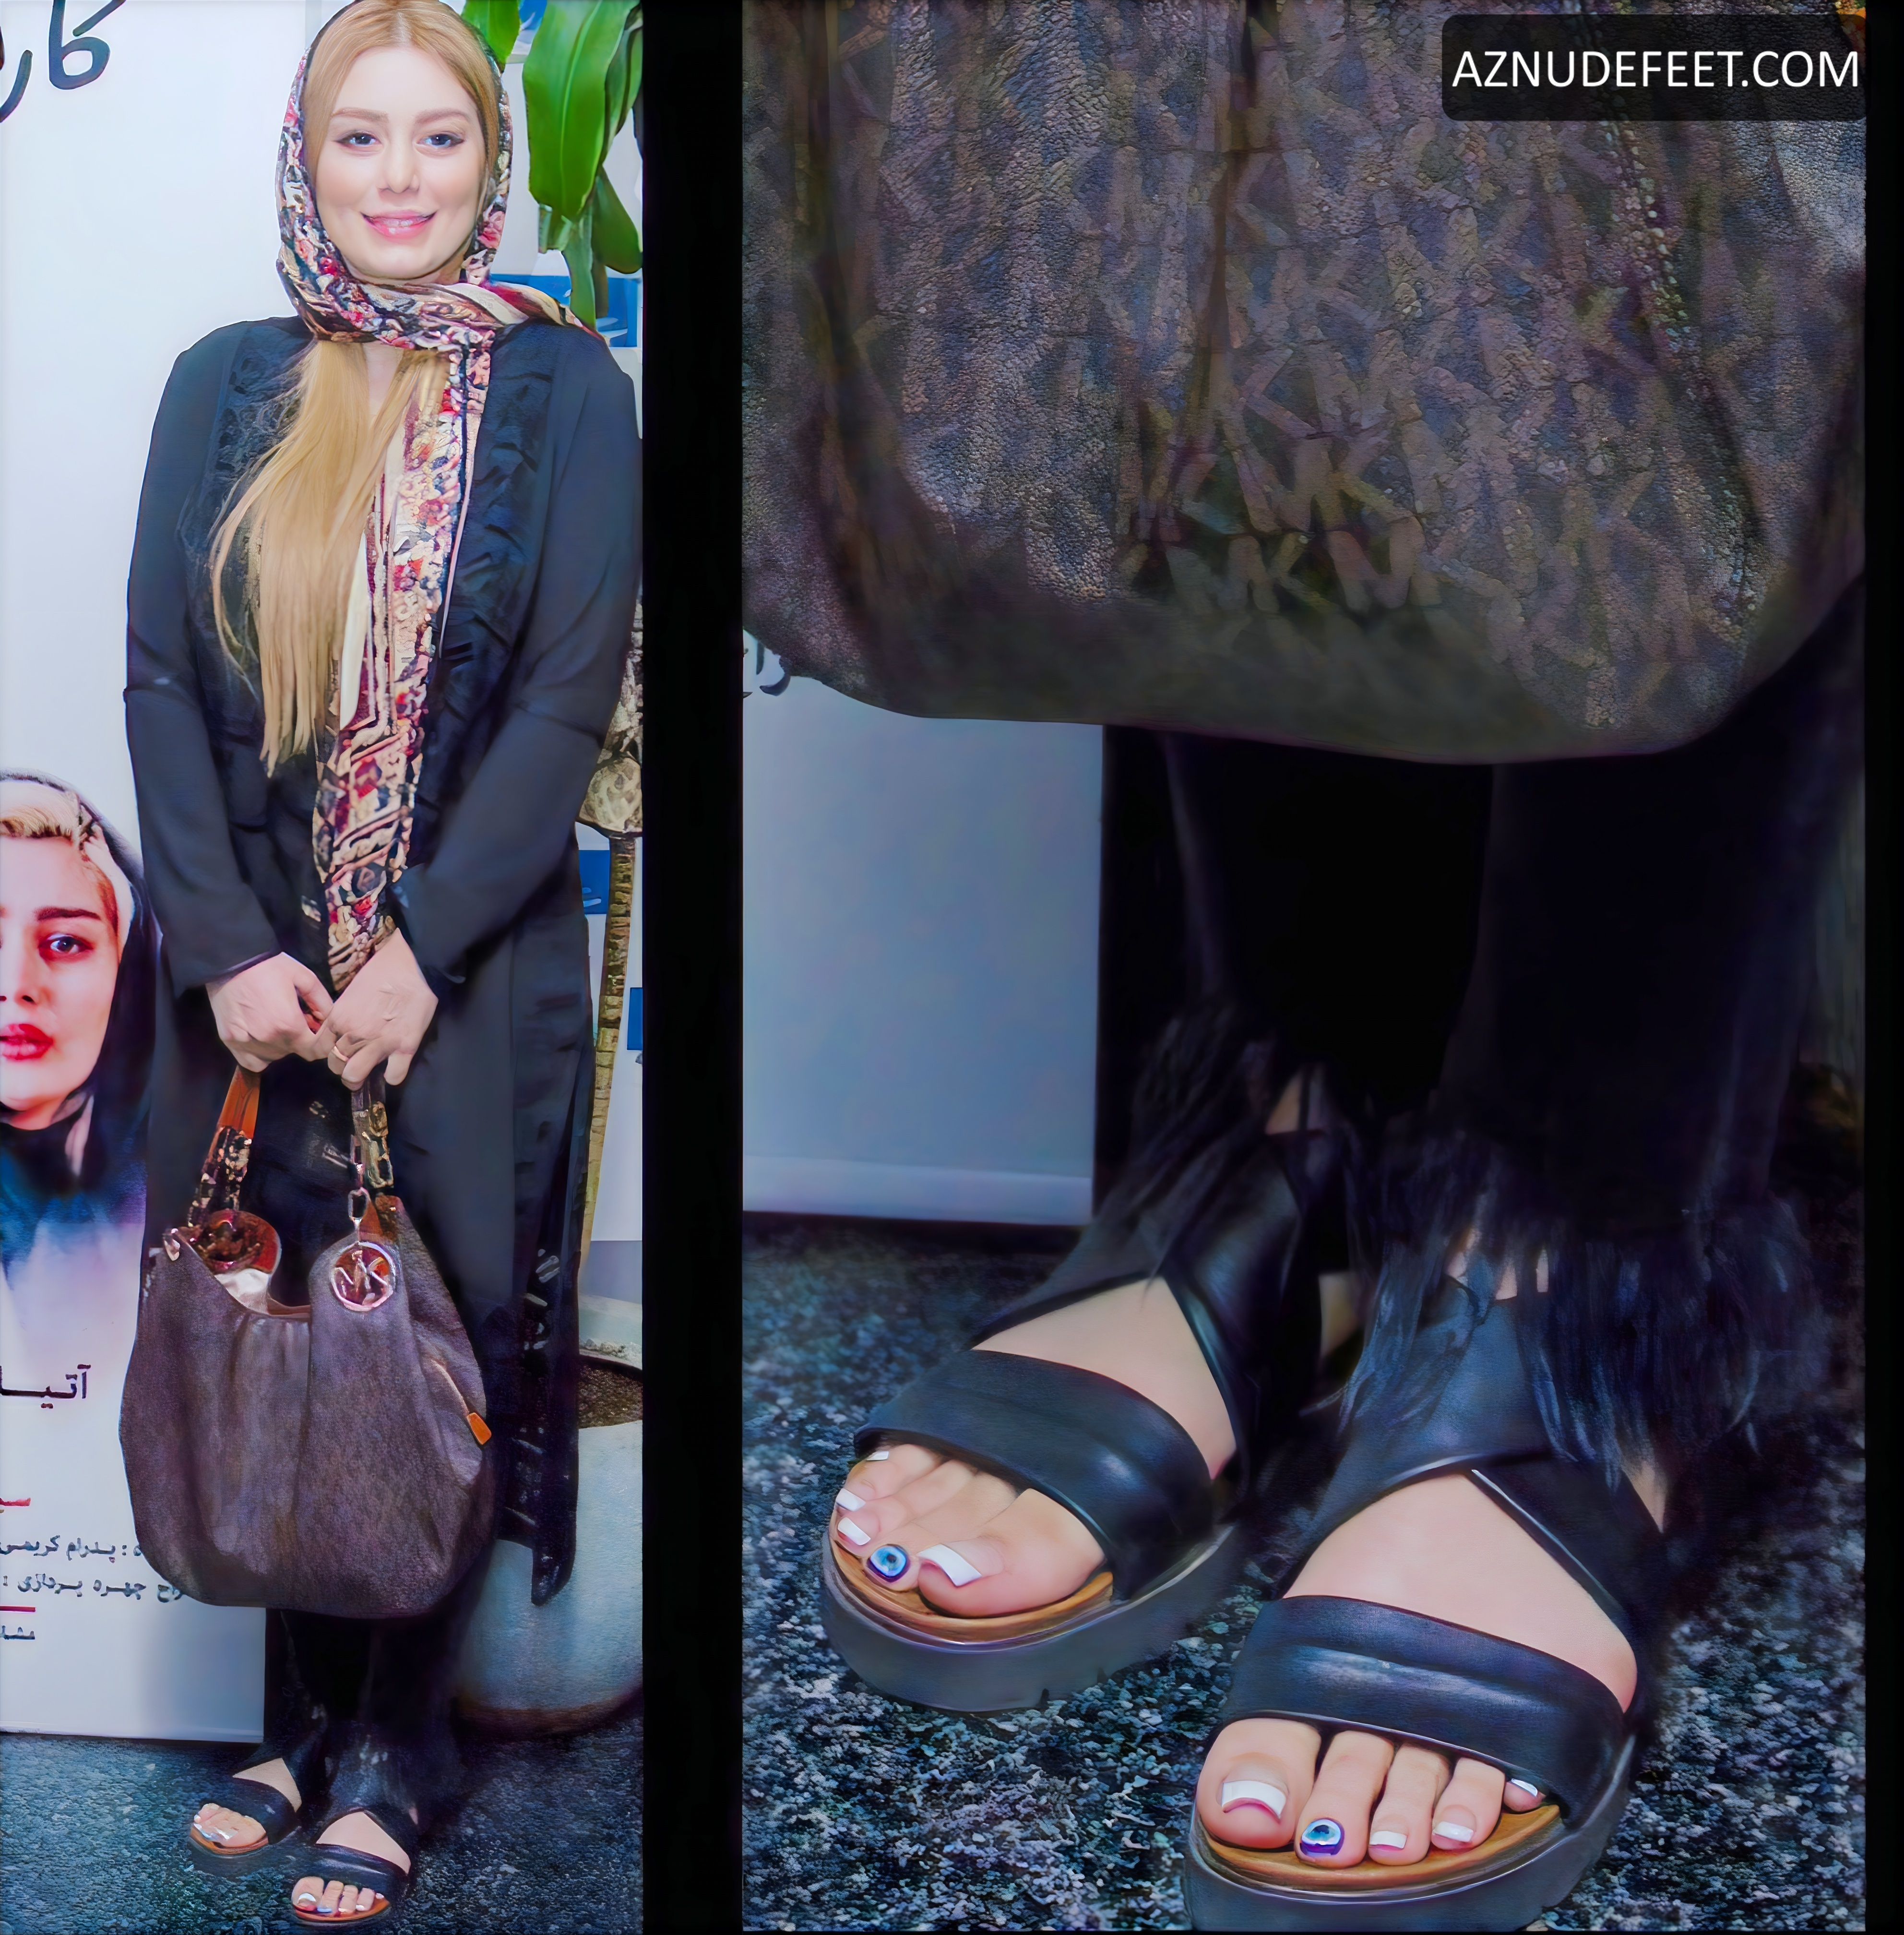 Sahar Ghoreishi Feet Aznudefeet